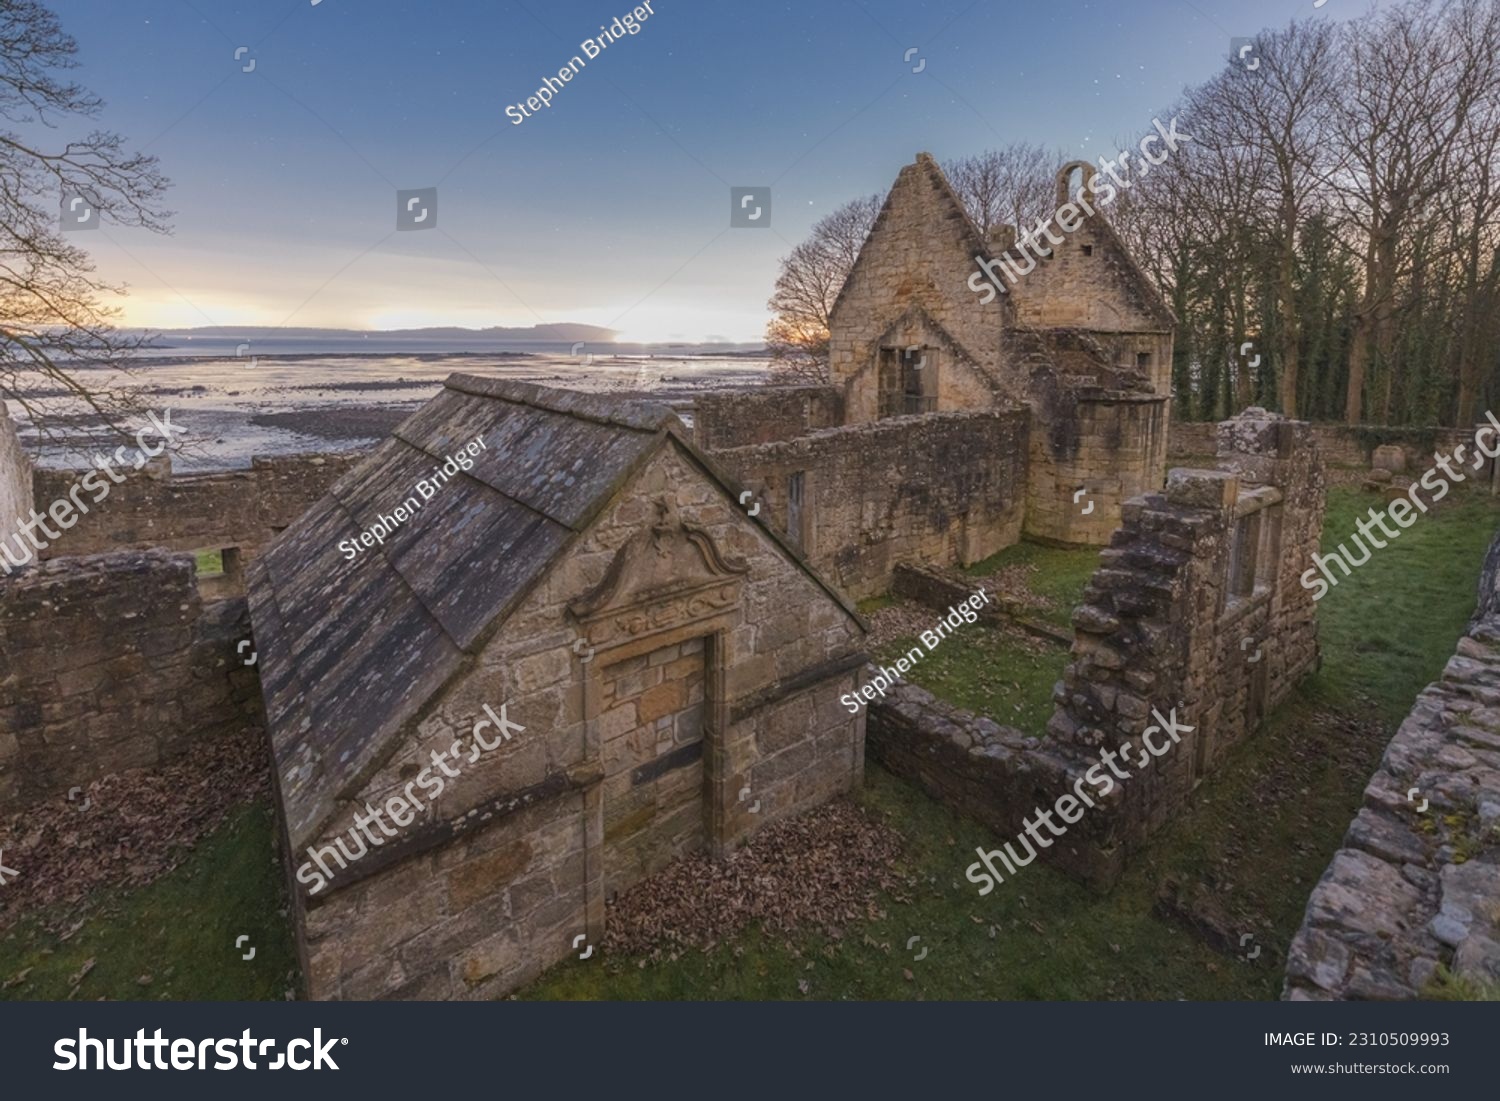 Ancient medieval stone ruins of historic 12th century church St. Bridget's at night along the seaside Fife Coastal Path in Dalgety Bay, Scotland, UK. #2310509993